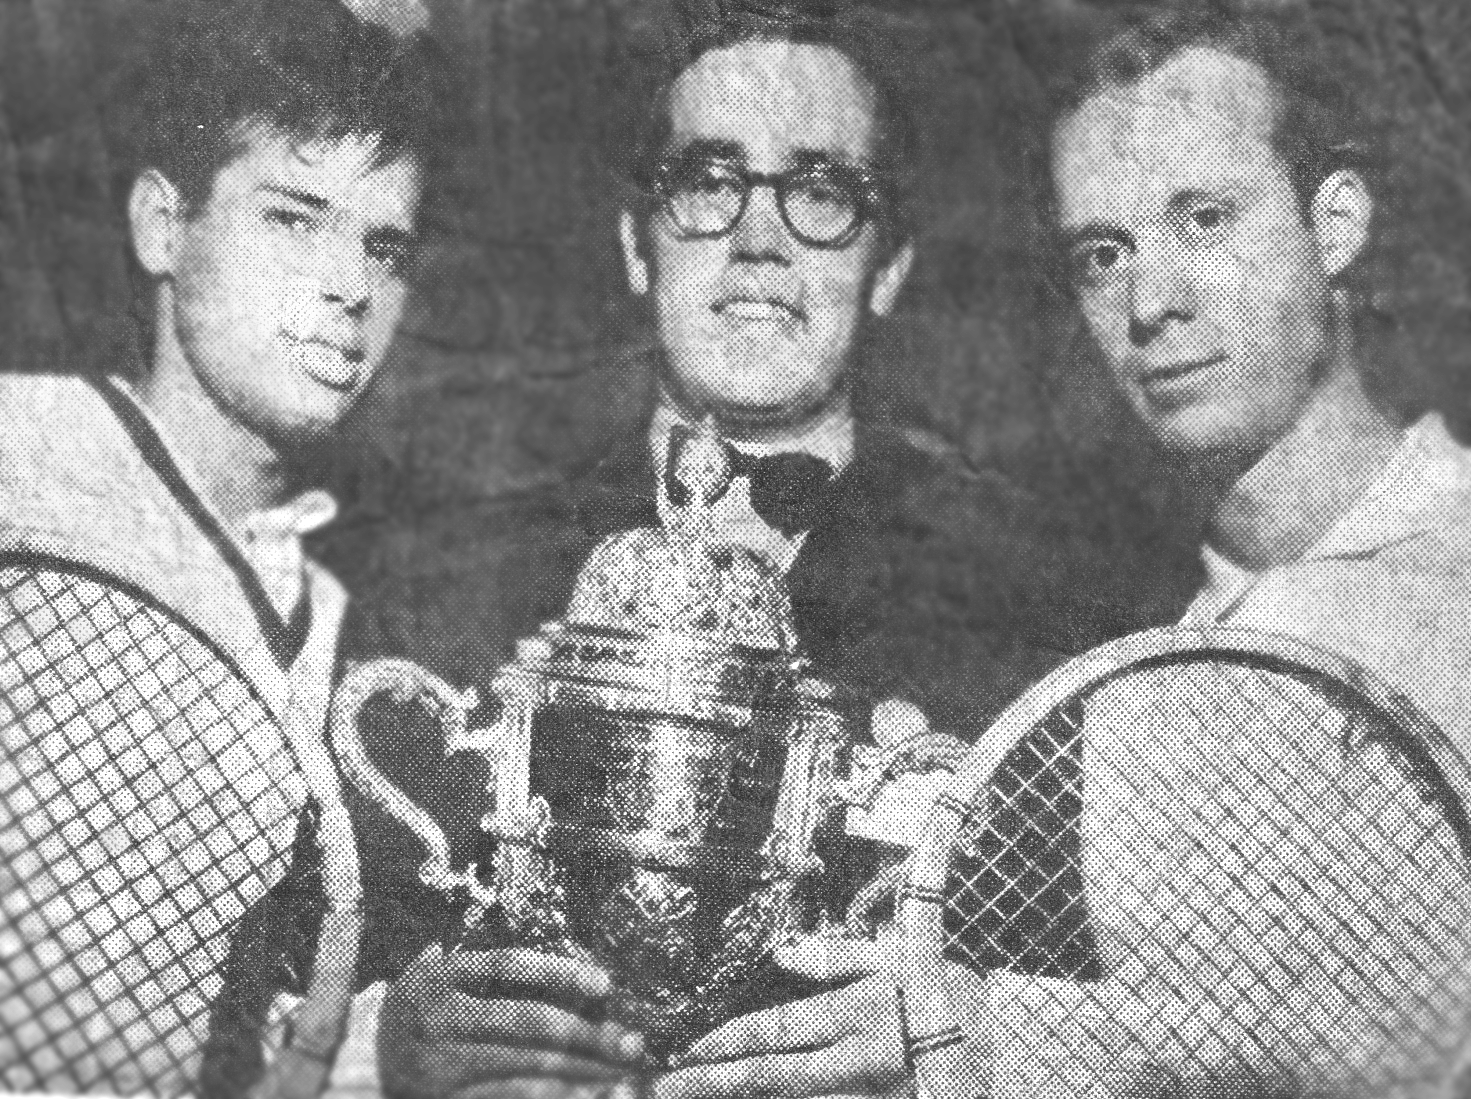 21. 1968 Canadian Squash National – Copy